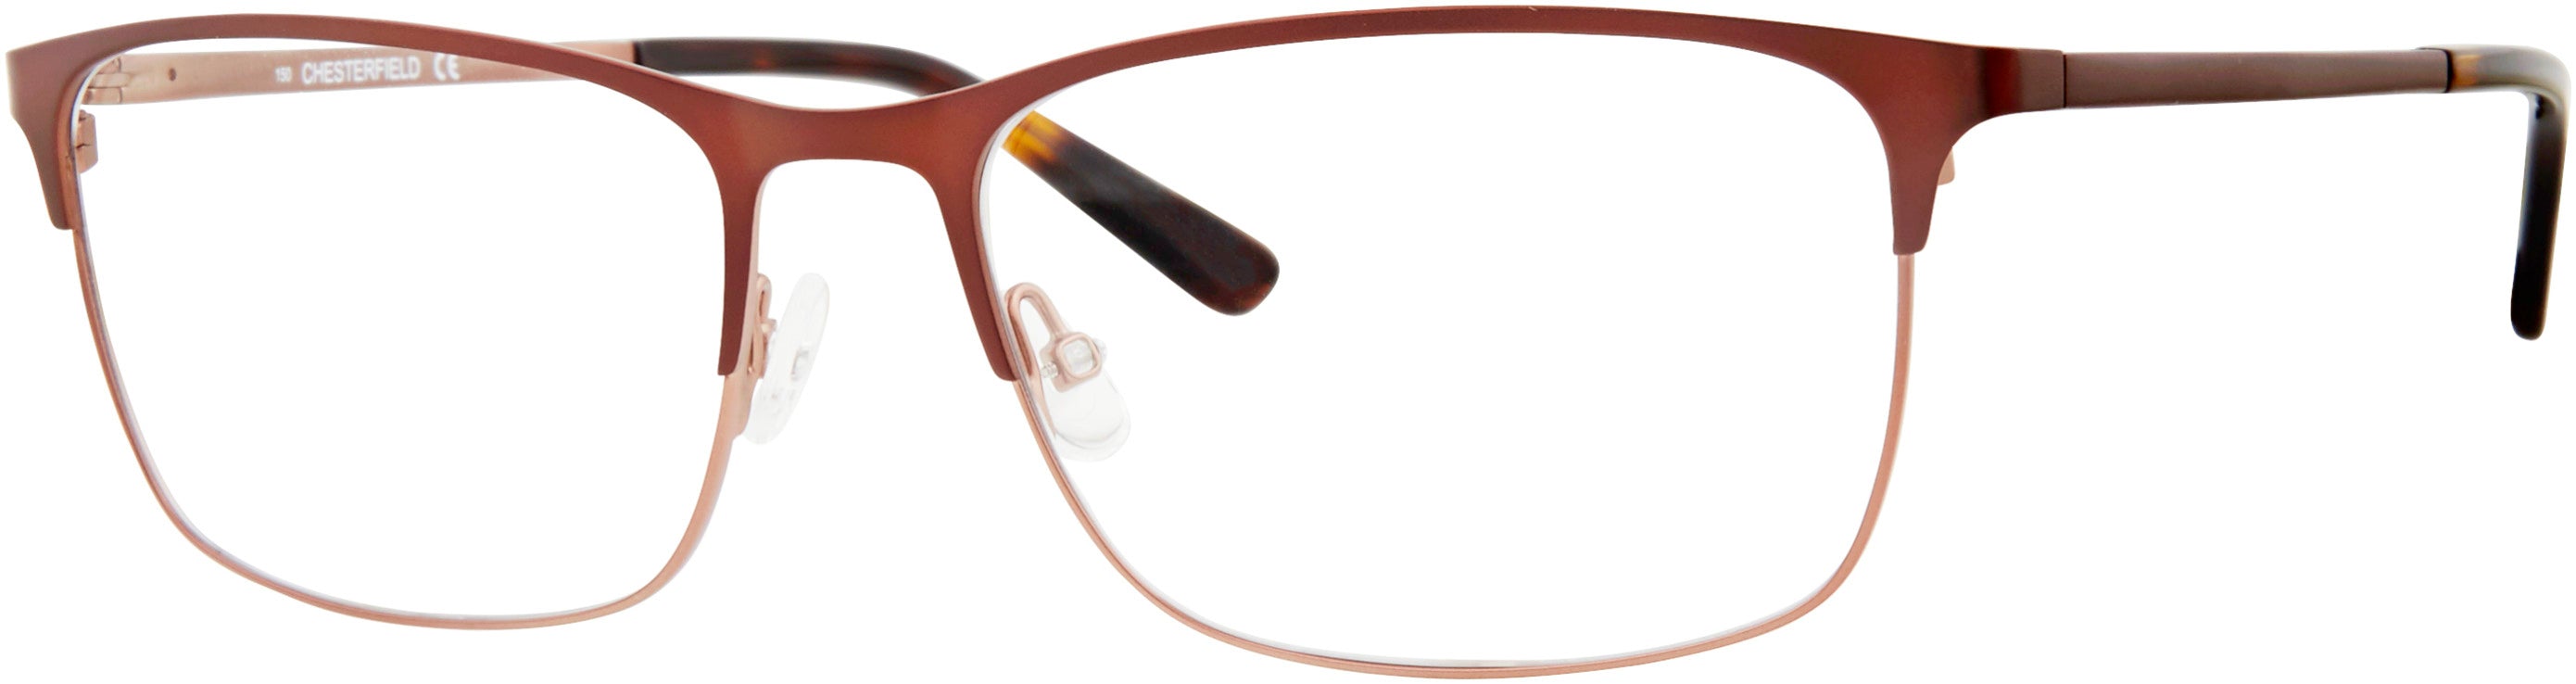  Chesterfield 63XL Rectangular Eyeglasses 009Q-009Q  Brown (00 Demo Lens)